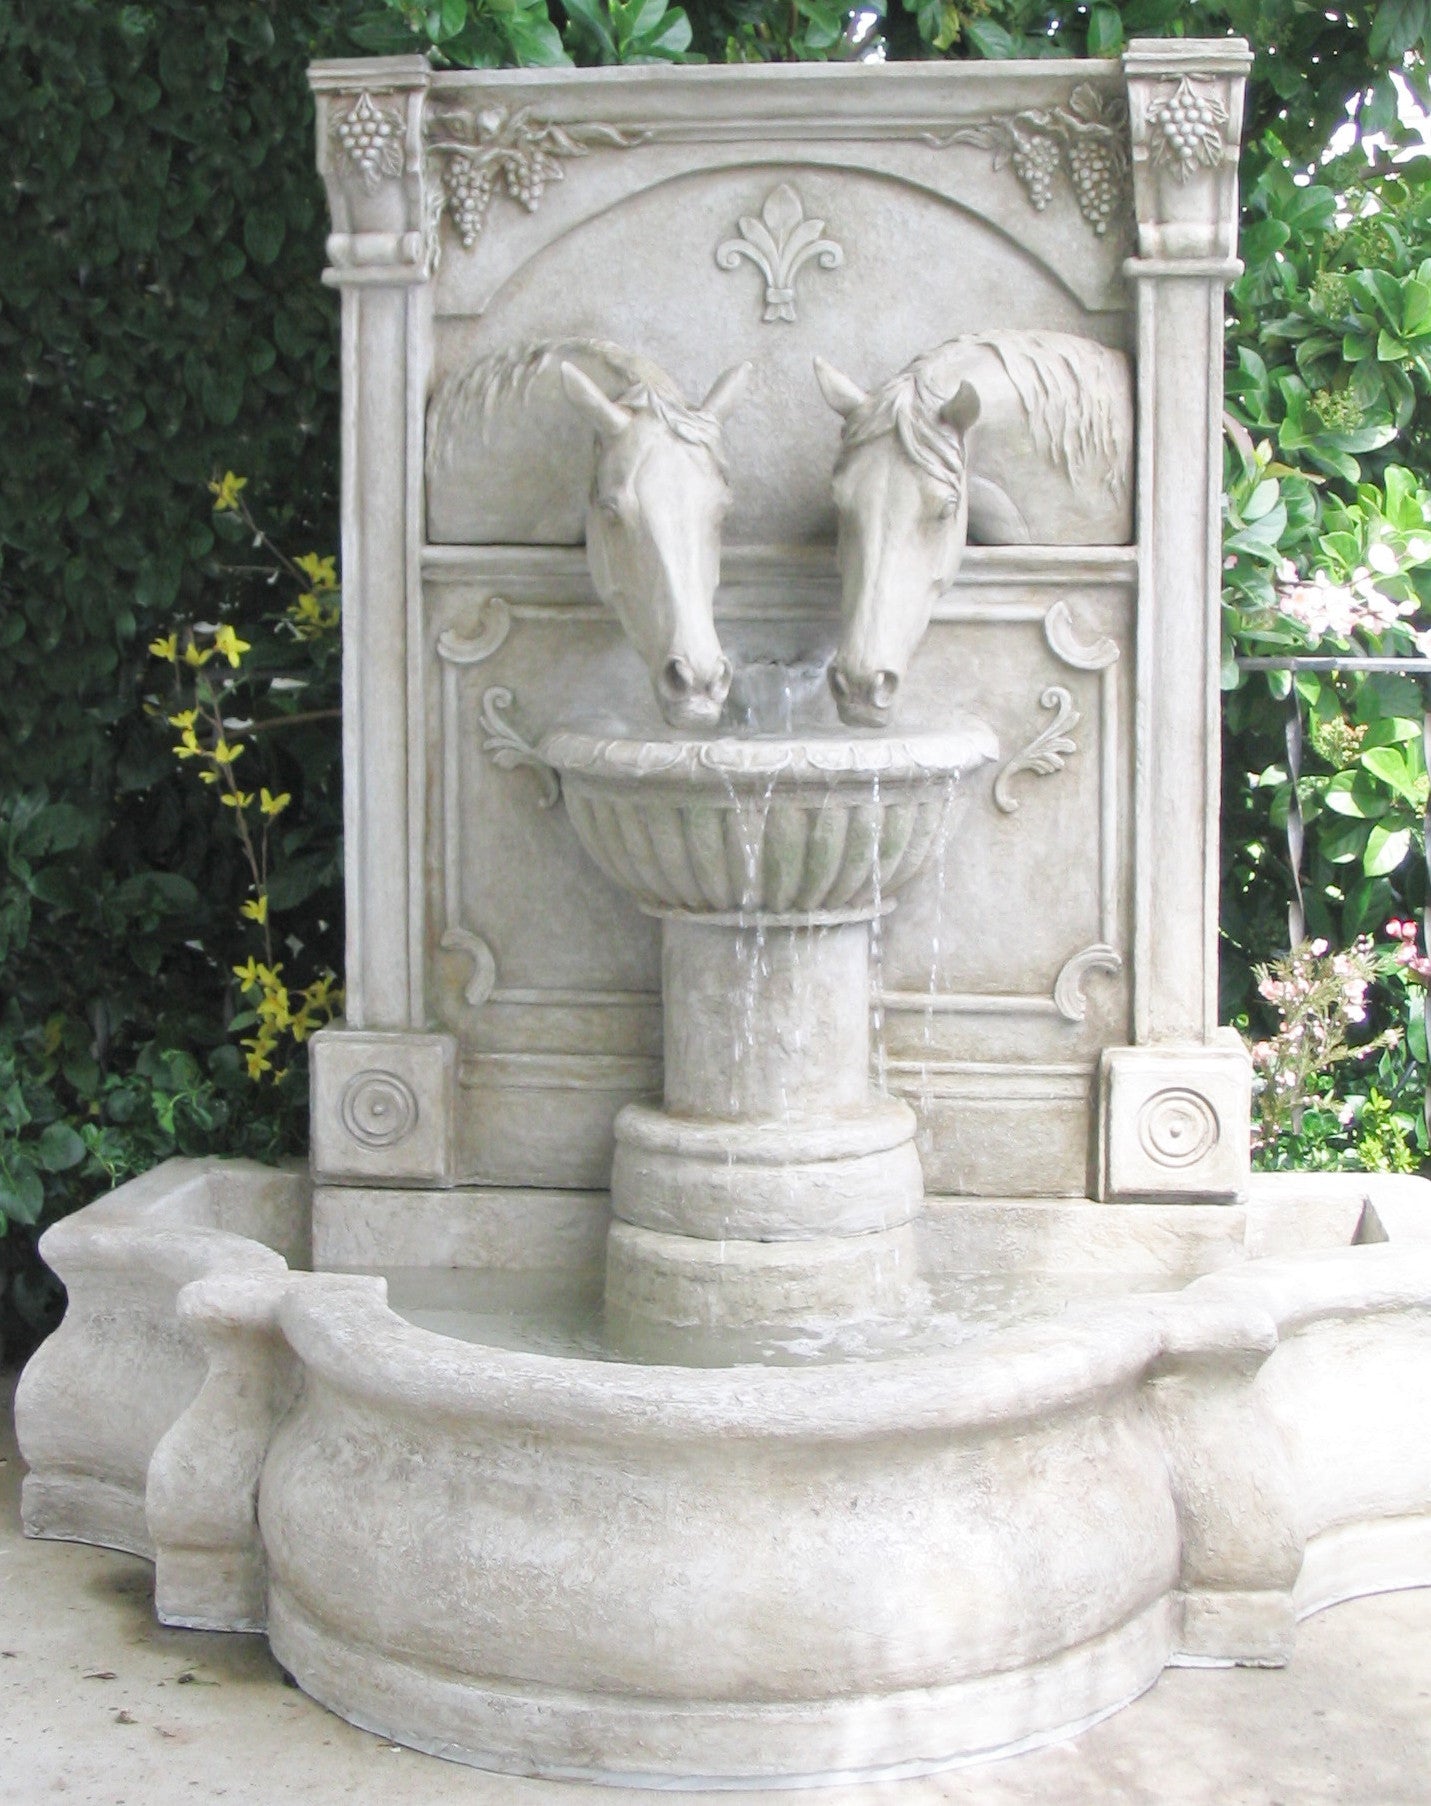 Sharing a Drink Fountain (Fiberglass) - Patricia Borum - 1